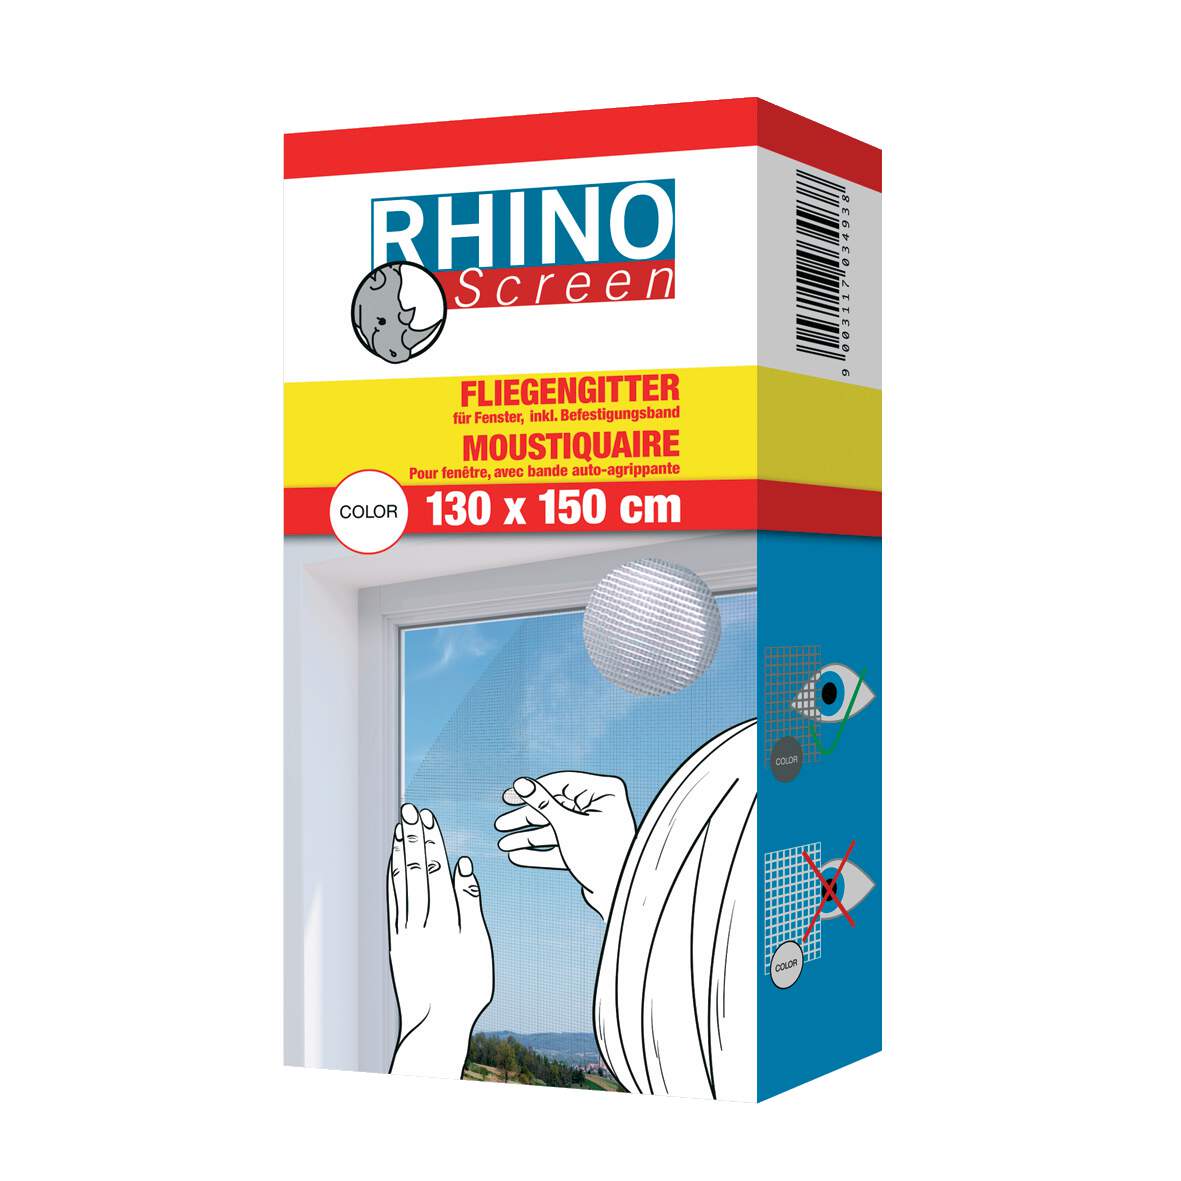 1221091 - Fliegengitter Rhino Screen 130x150cm weiß